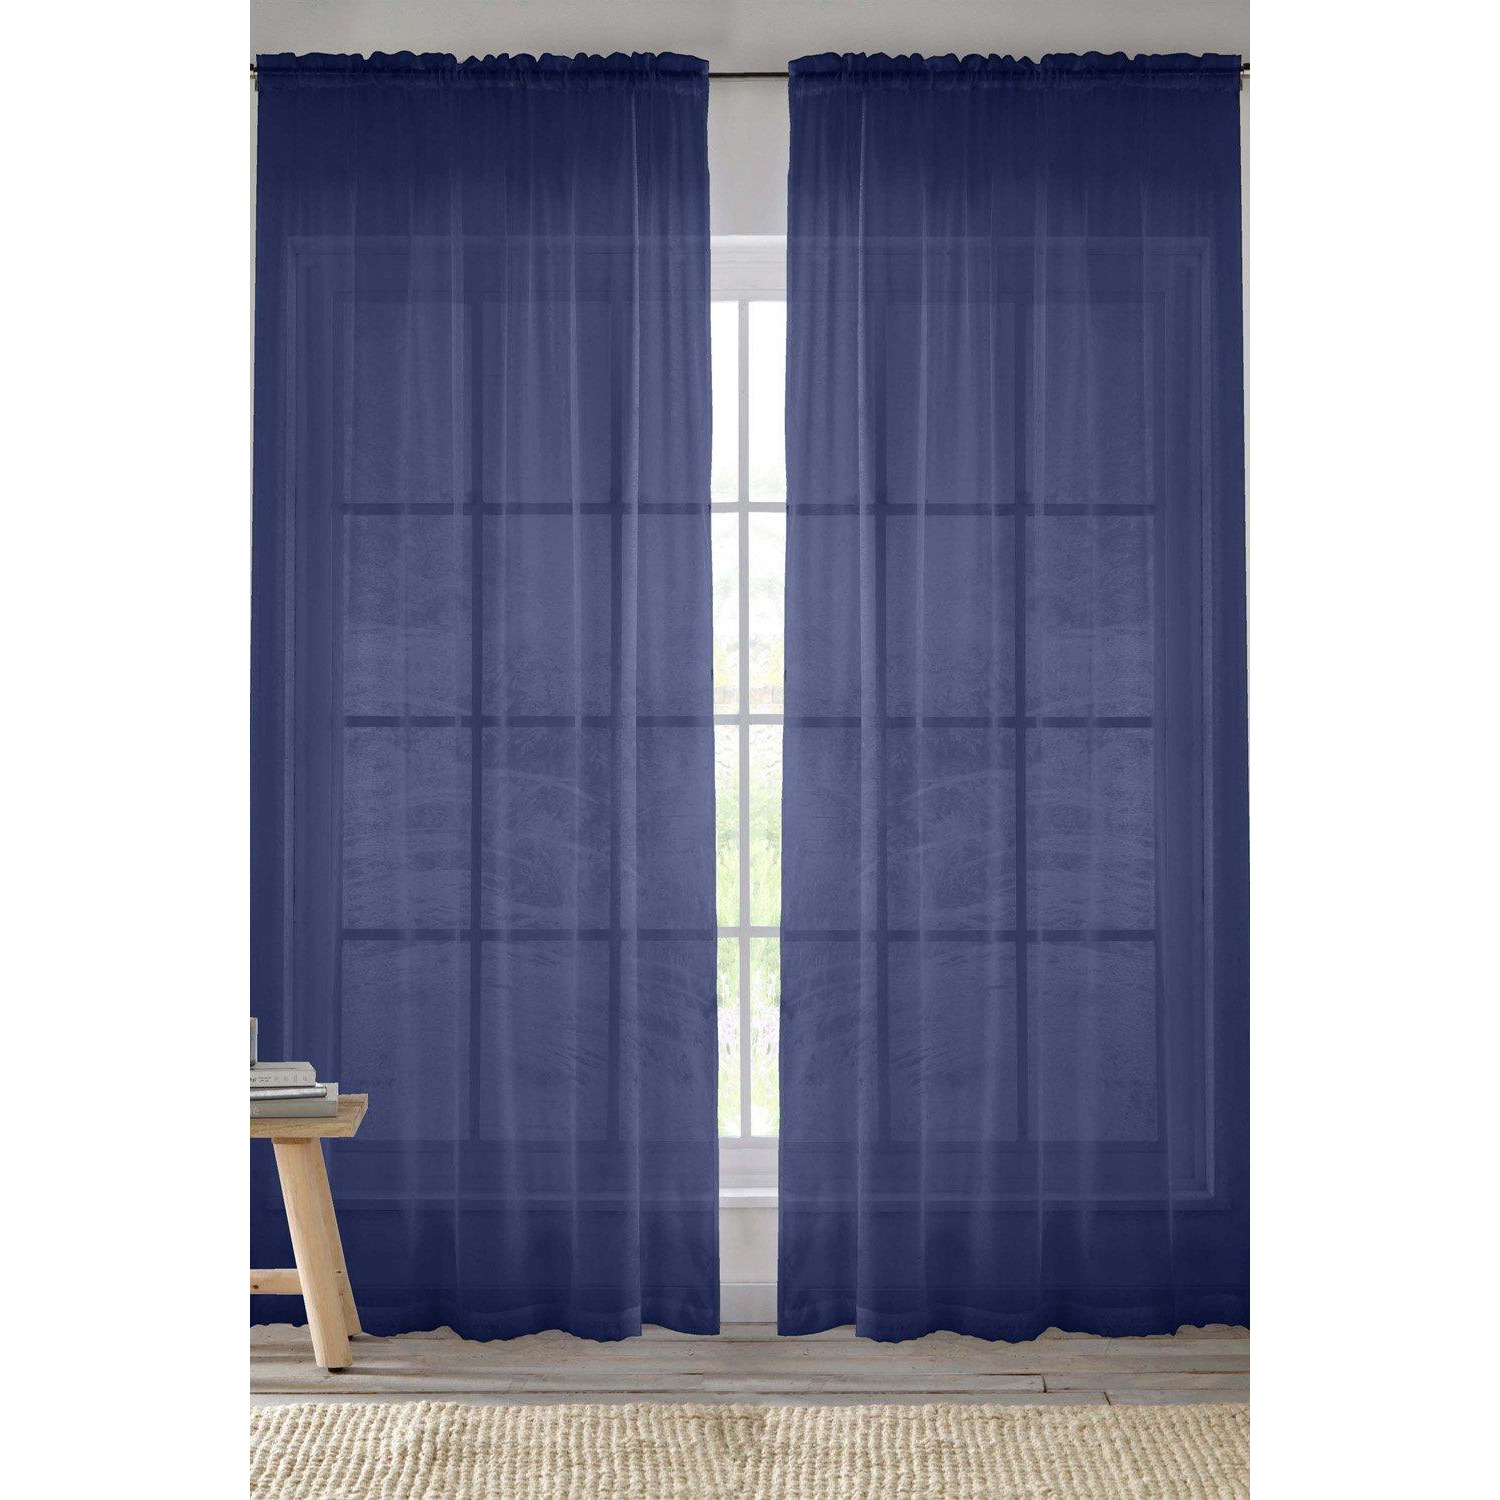 Sheer Plain Woven Voile Slot Top Curtain Panel Pair - image 1